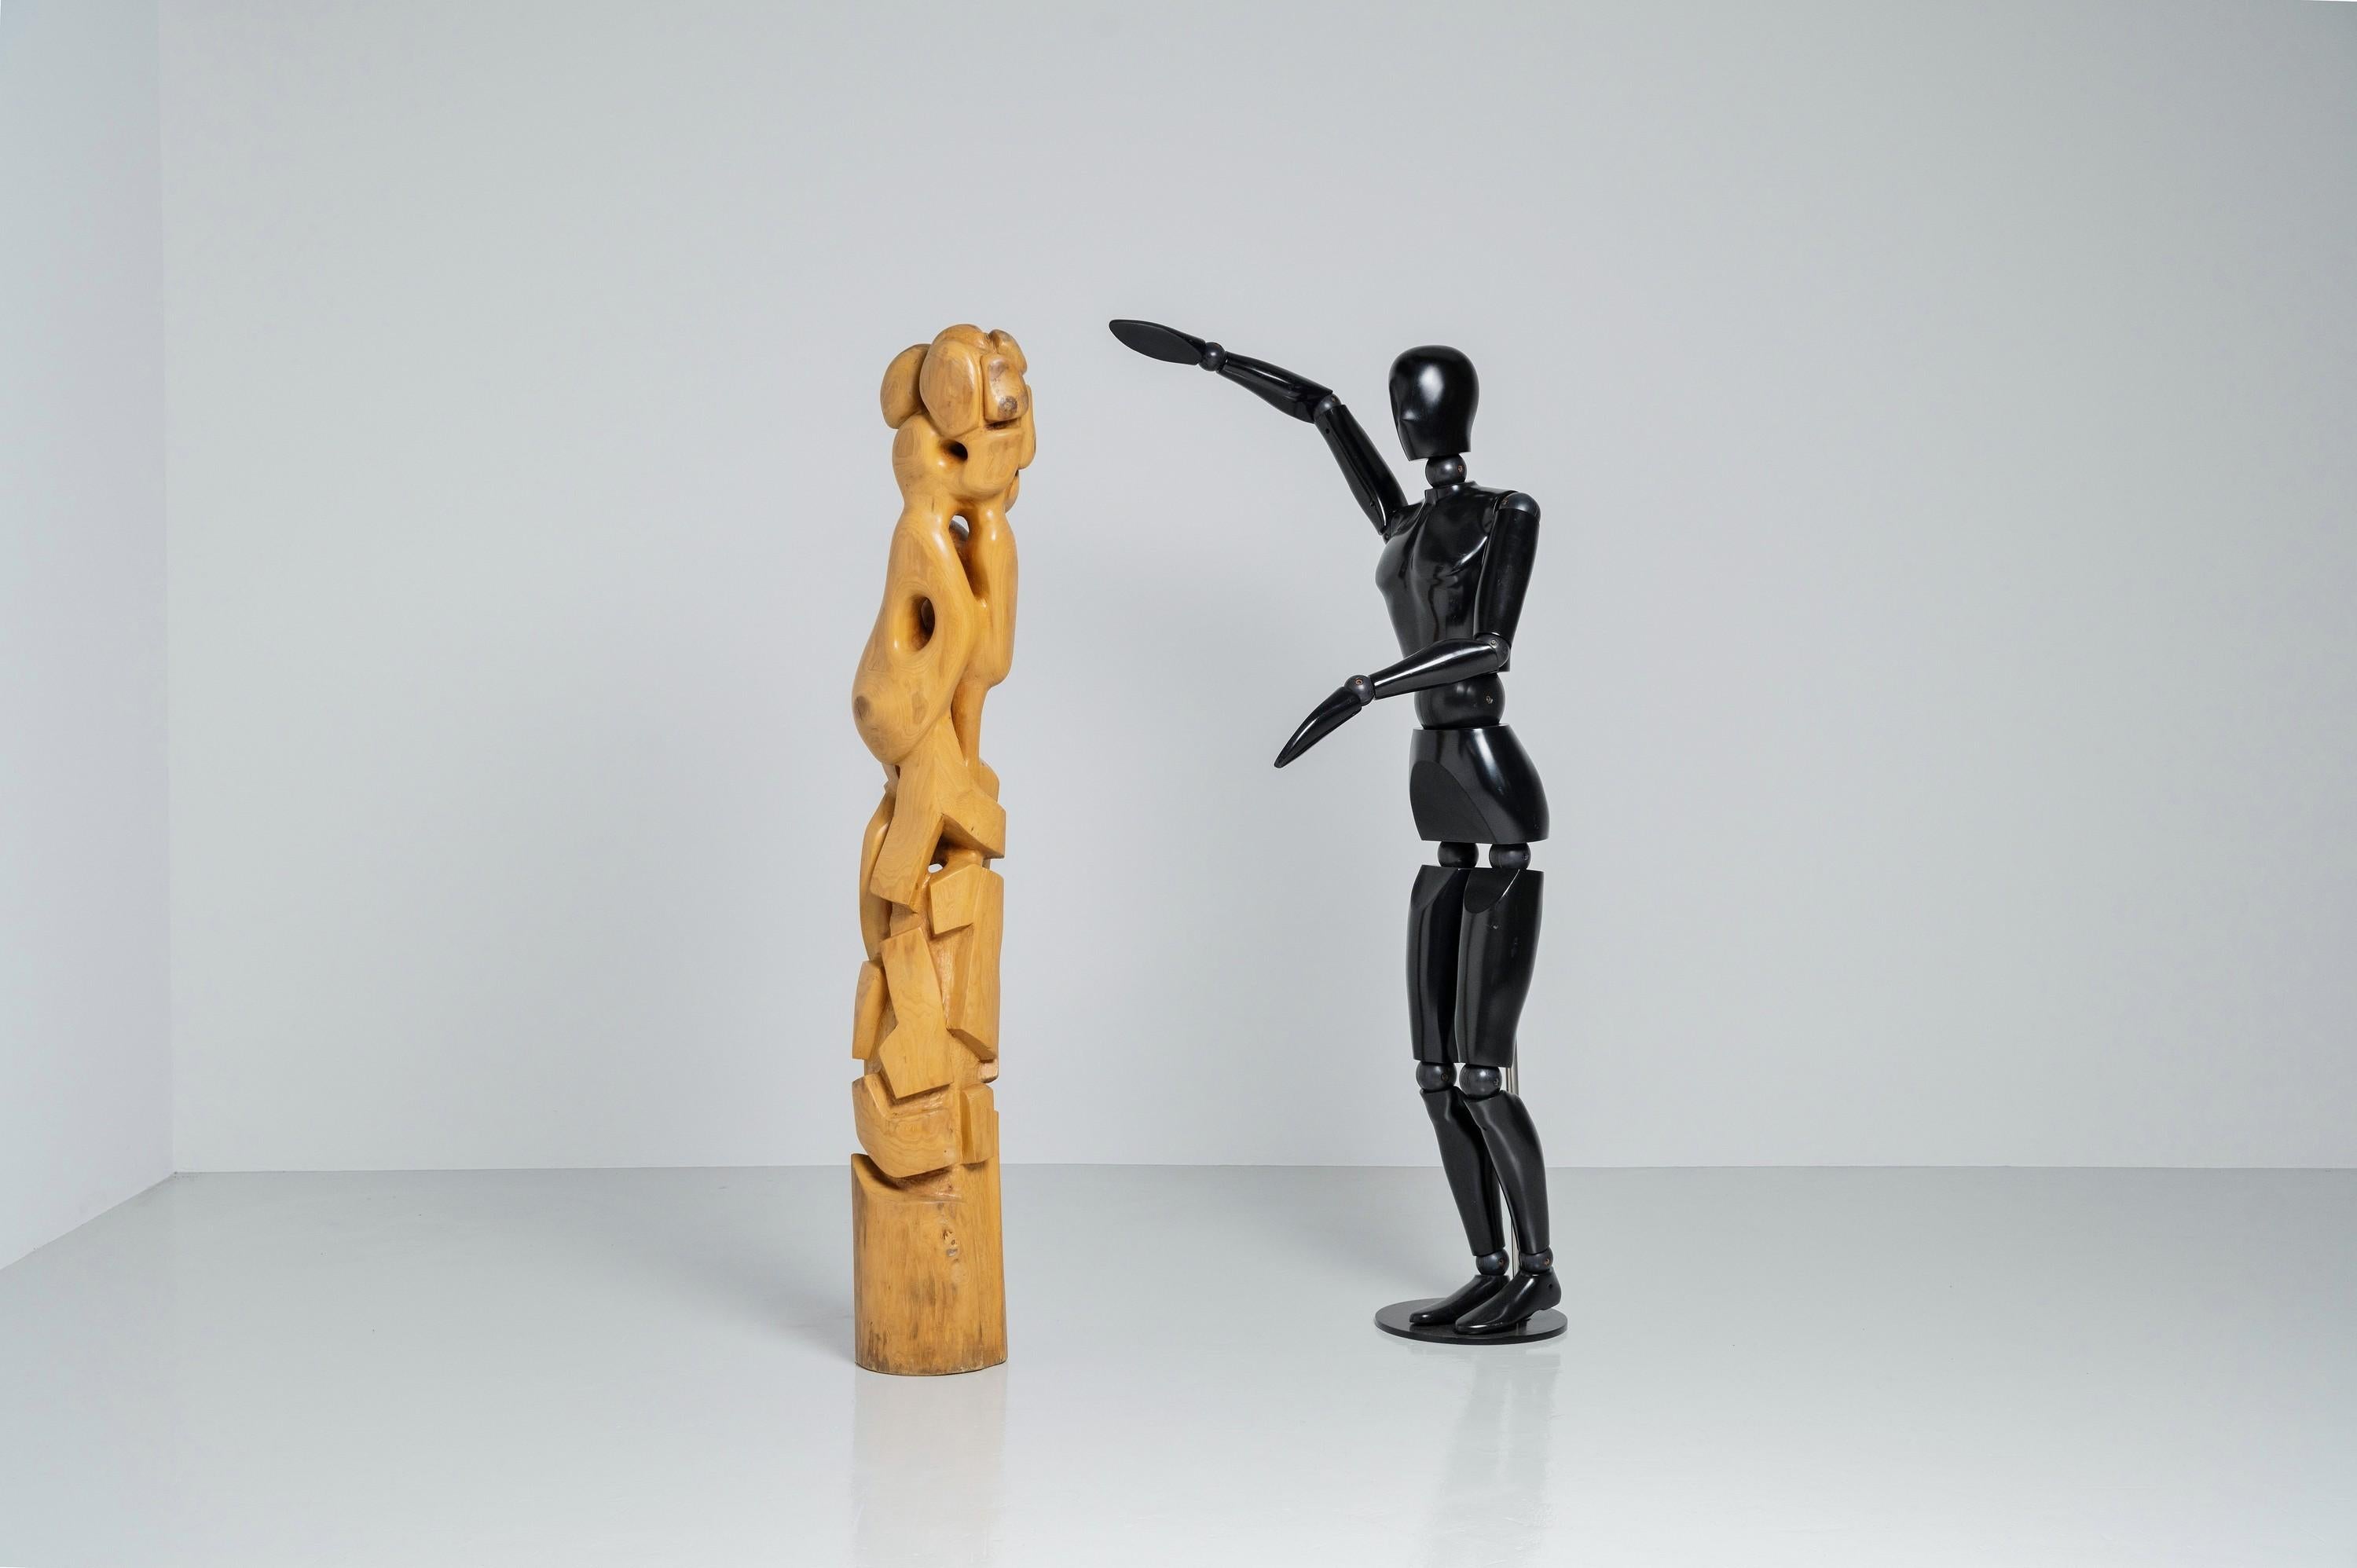 Mid-Century Modern Sculpture TOTEM abstraite Hollande R van 't Zelfde des années 1970 en vente